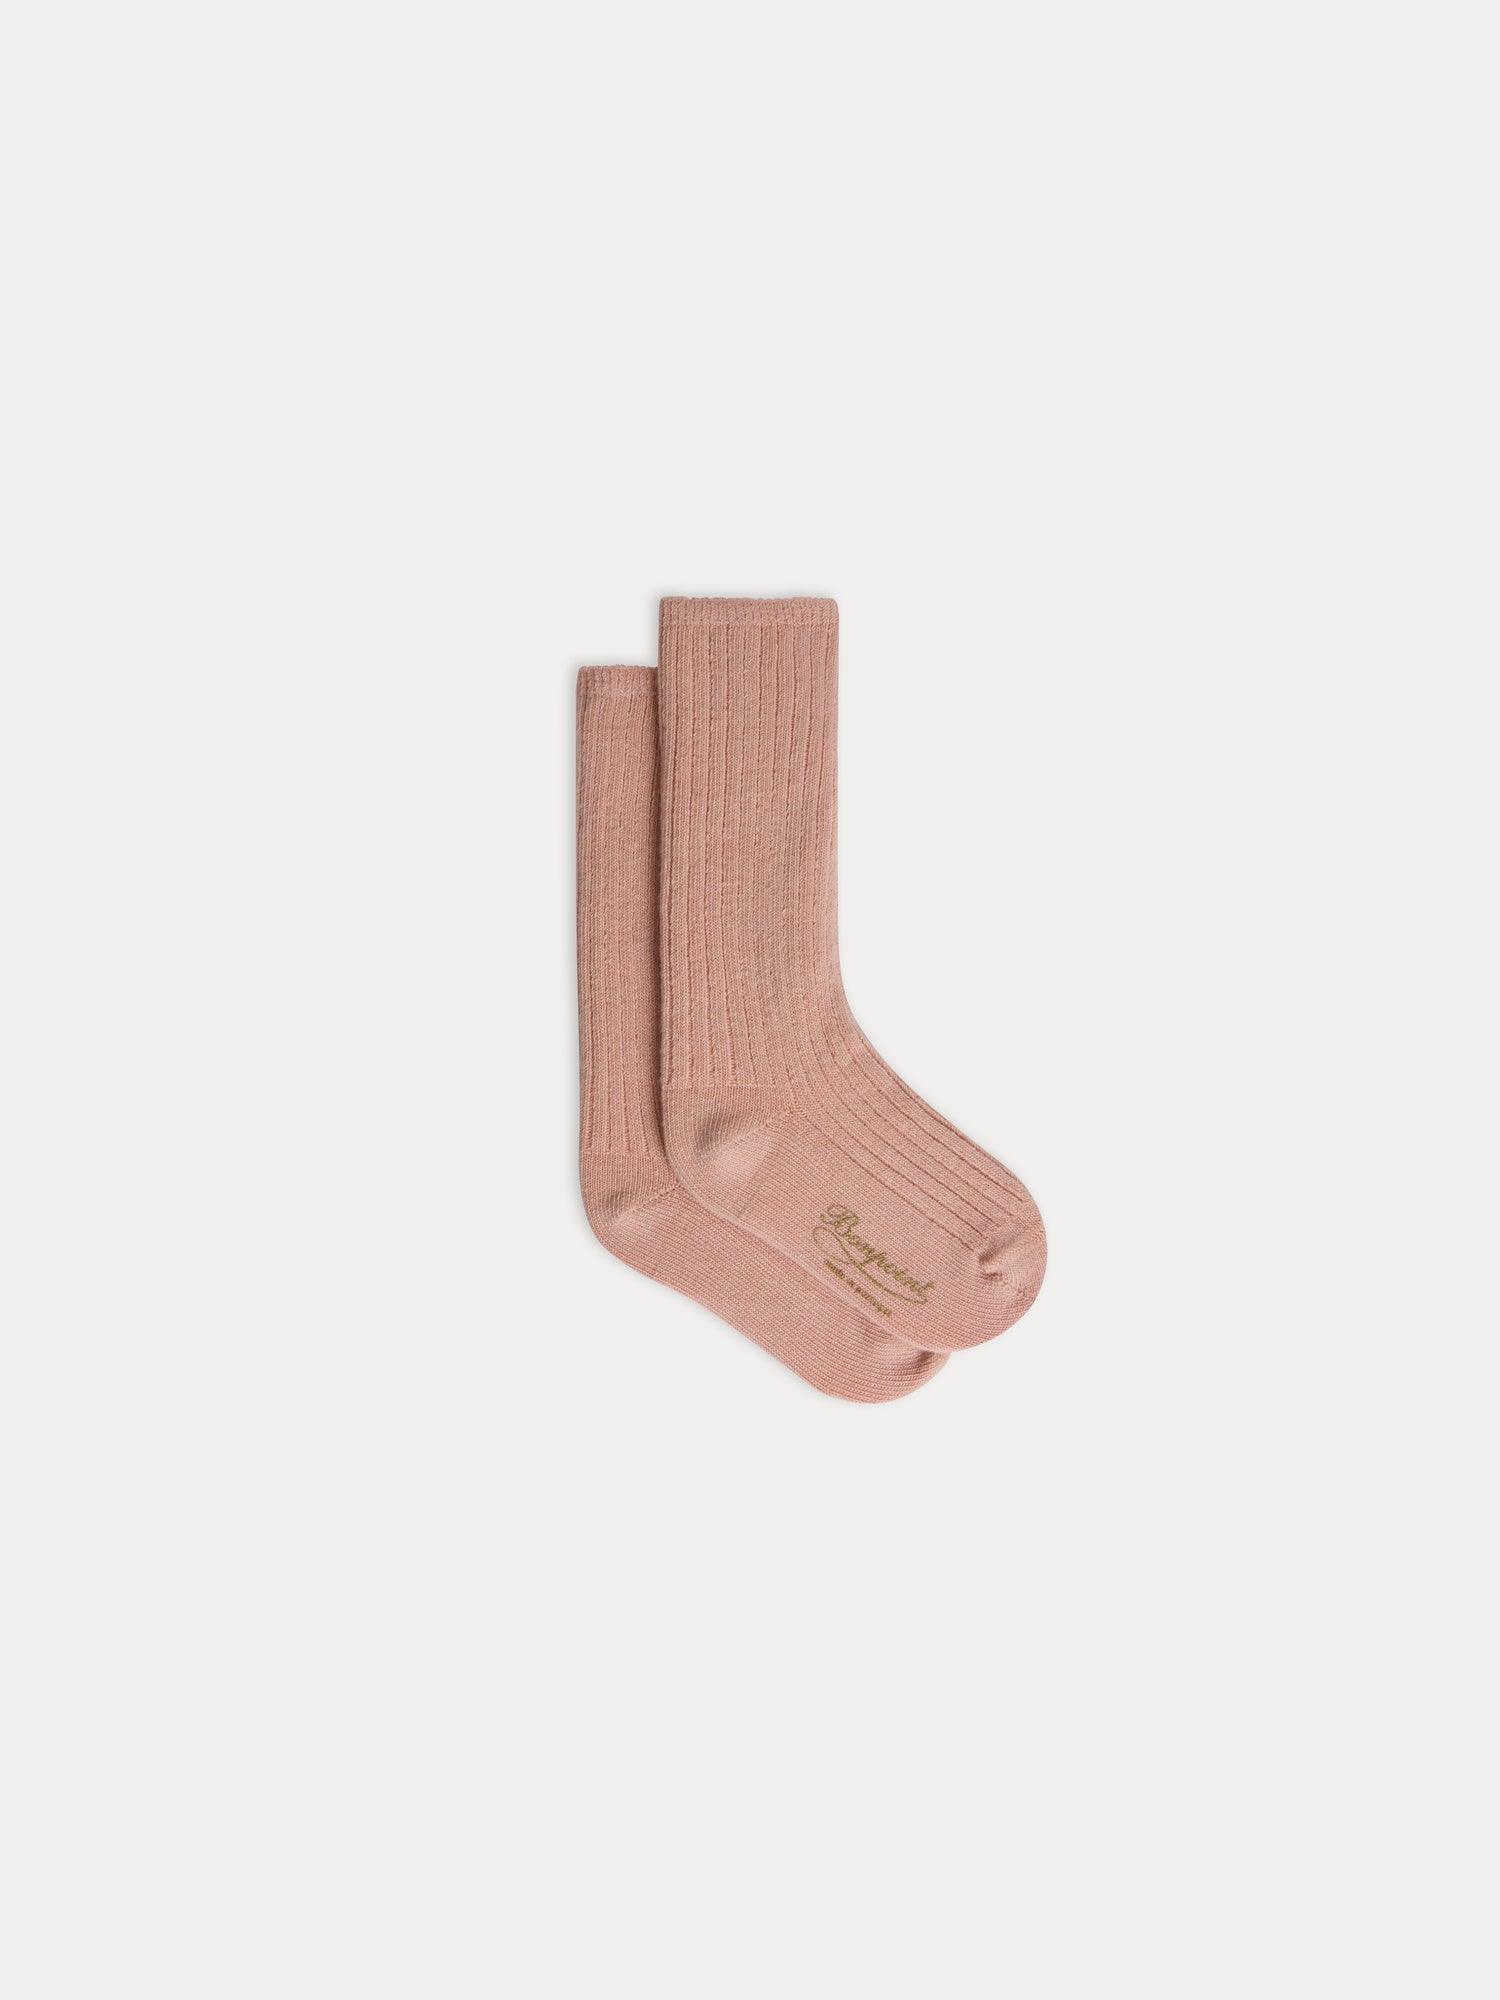 Baby Boys & Girls Pink Cotton Socks